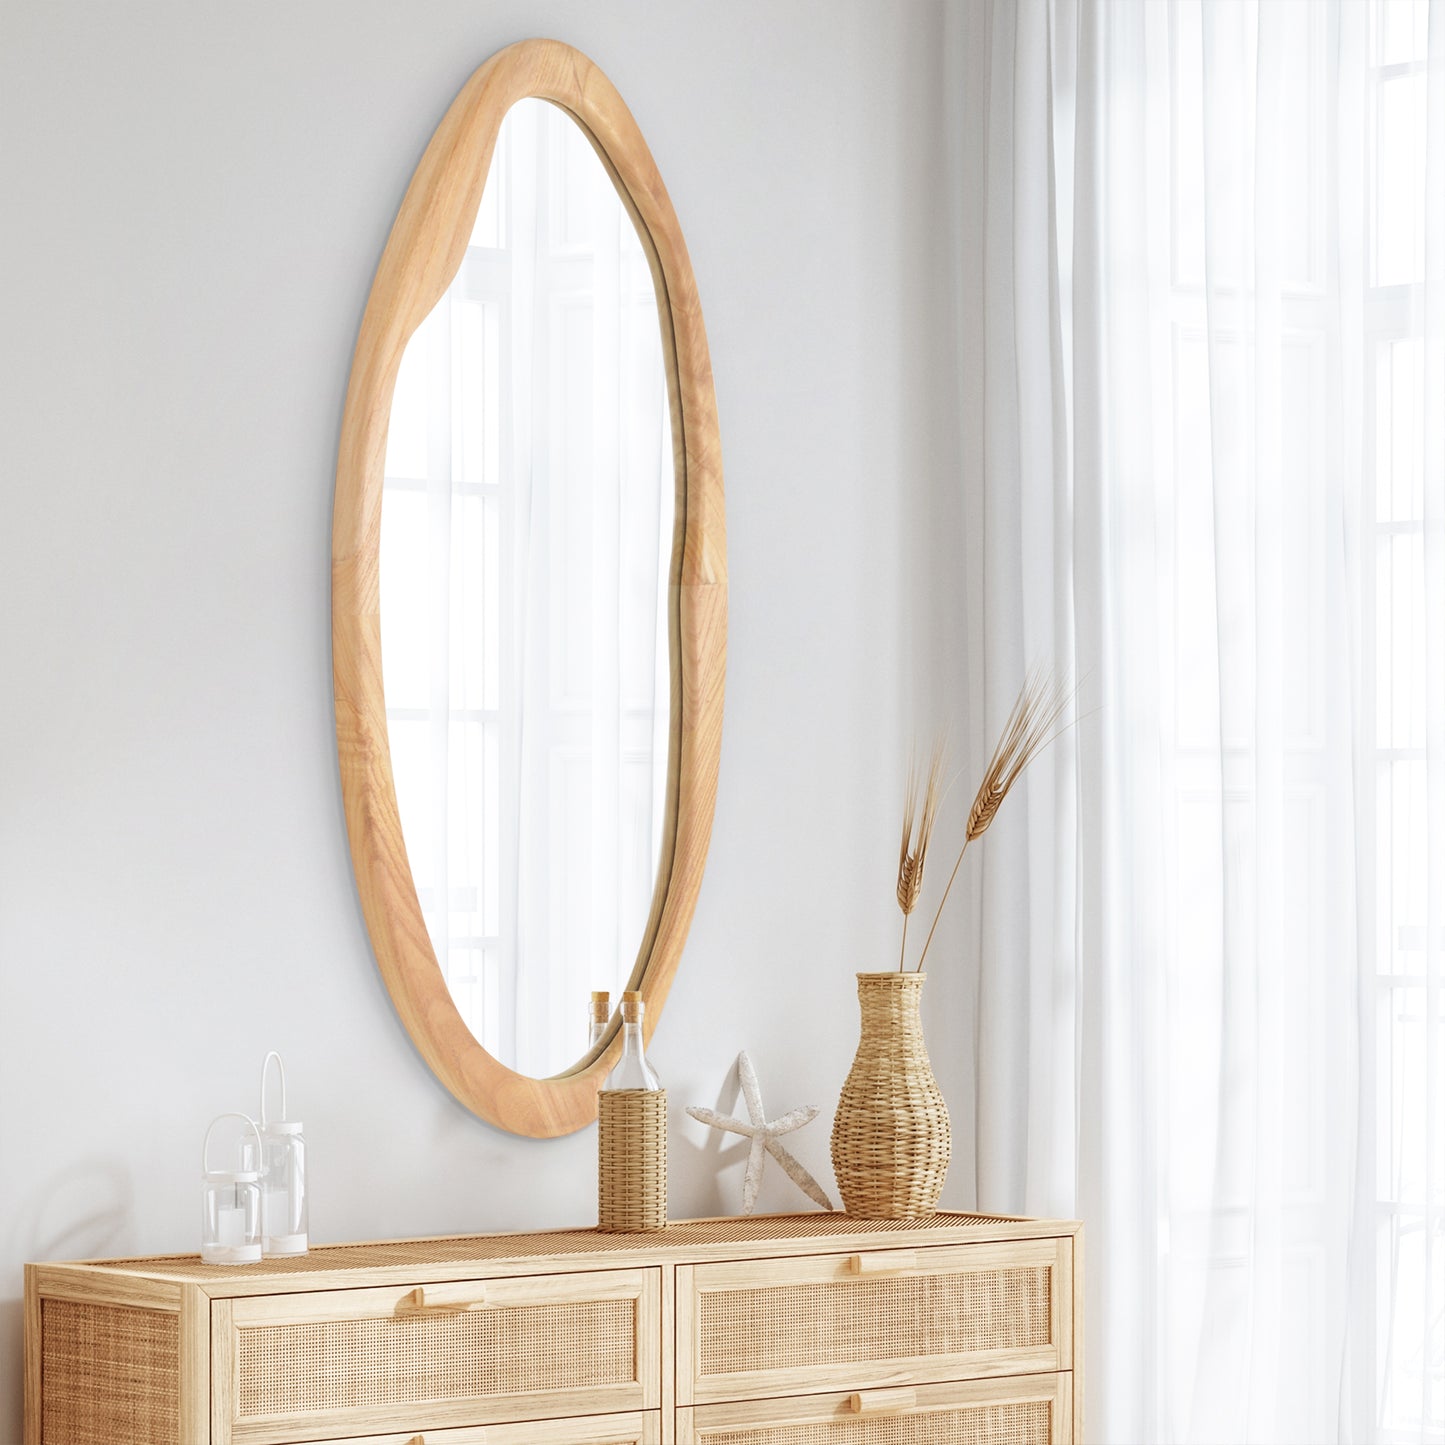 Asymmetrical Mirror - Irregular Wall Mirror for Bathroom, Living Room, Entryway Hall, and Decorative Mirror for Bedroom